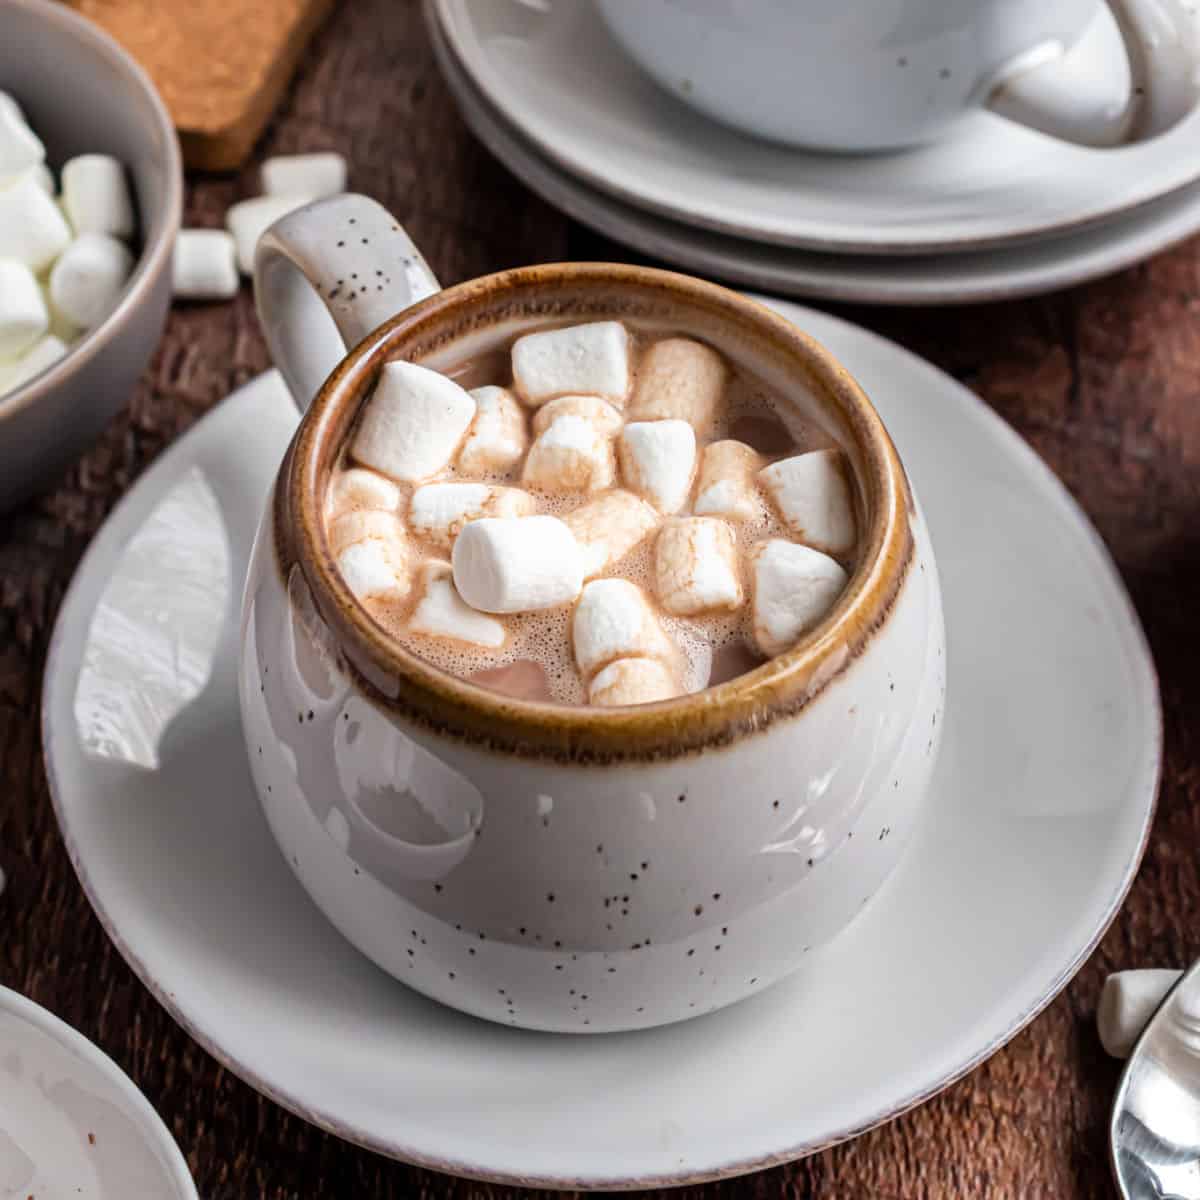 https://www.shugarysweets.com/wp-content/uploads/2012/01/hot-chocolate-recipe.jpg